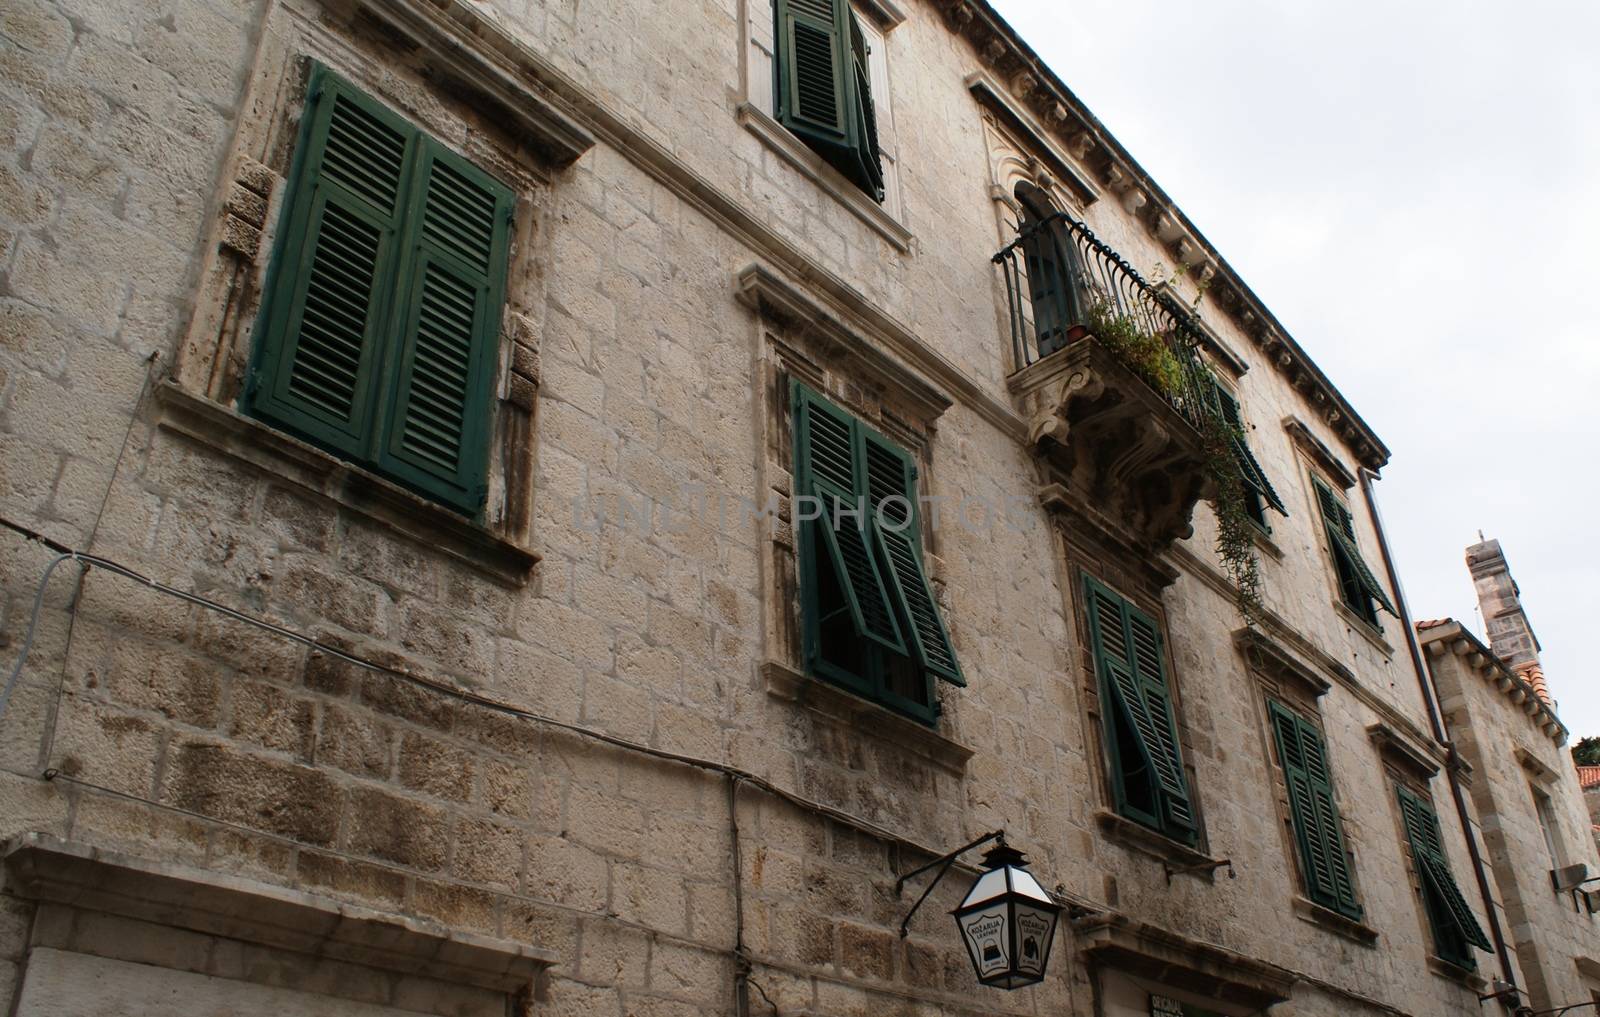 Dirty ancient building in Dubrovnik, Croatia, Europe